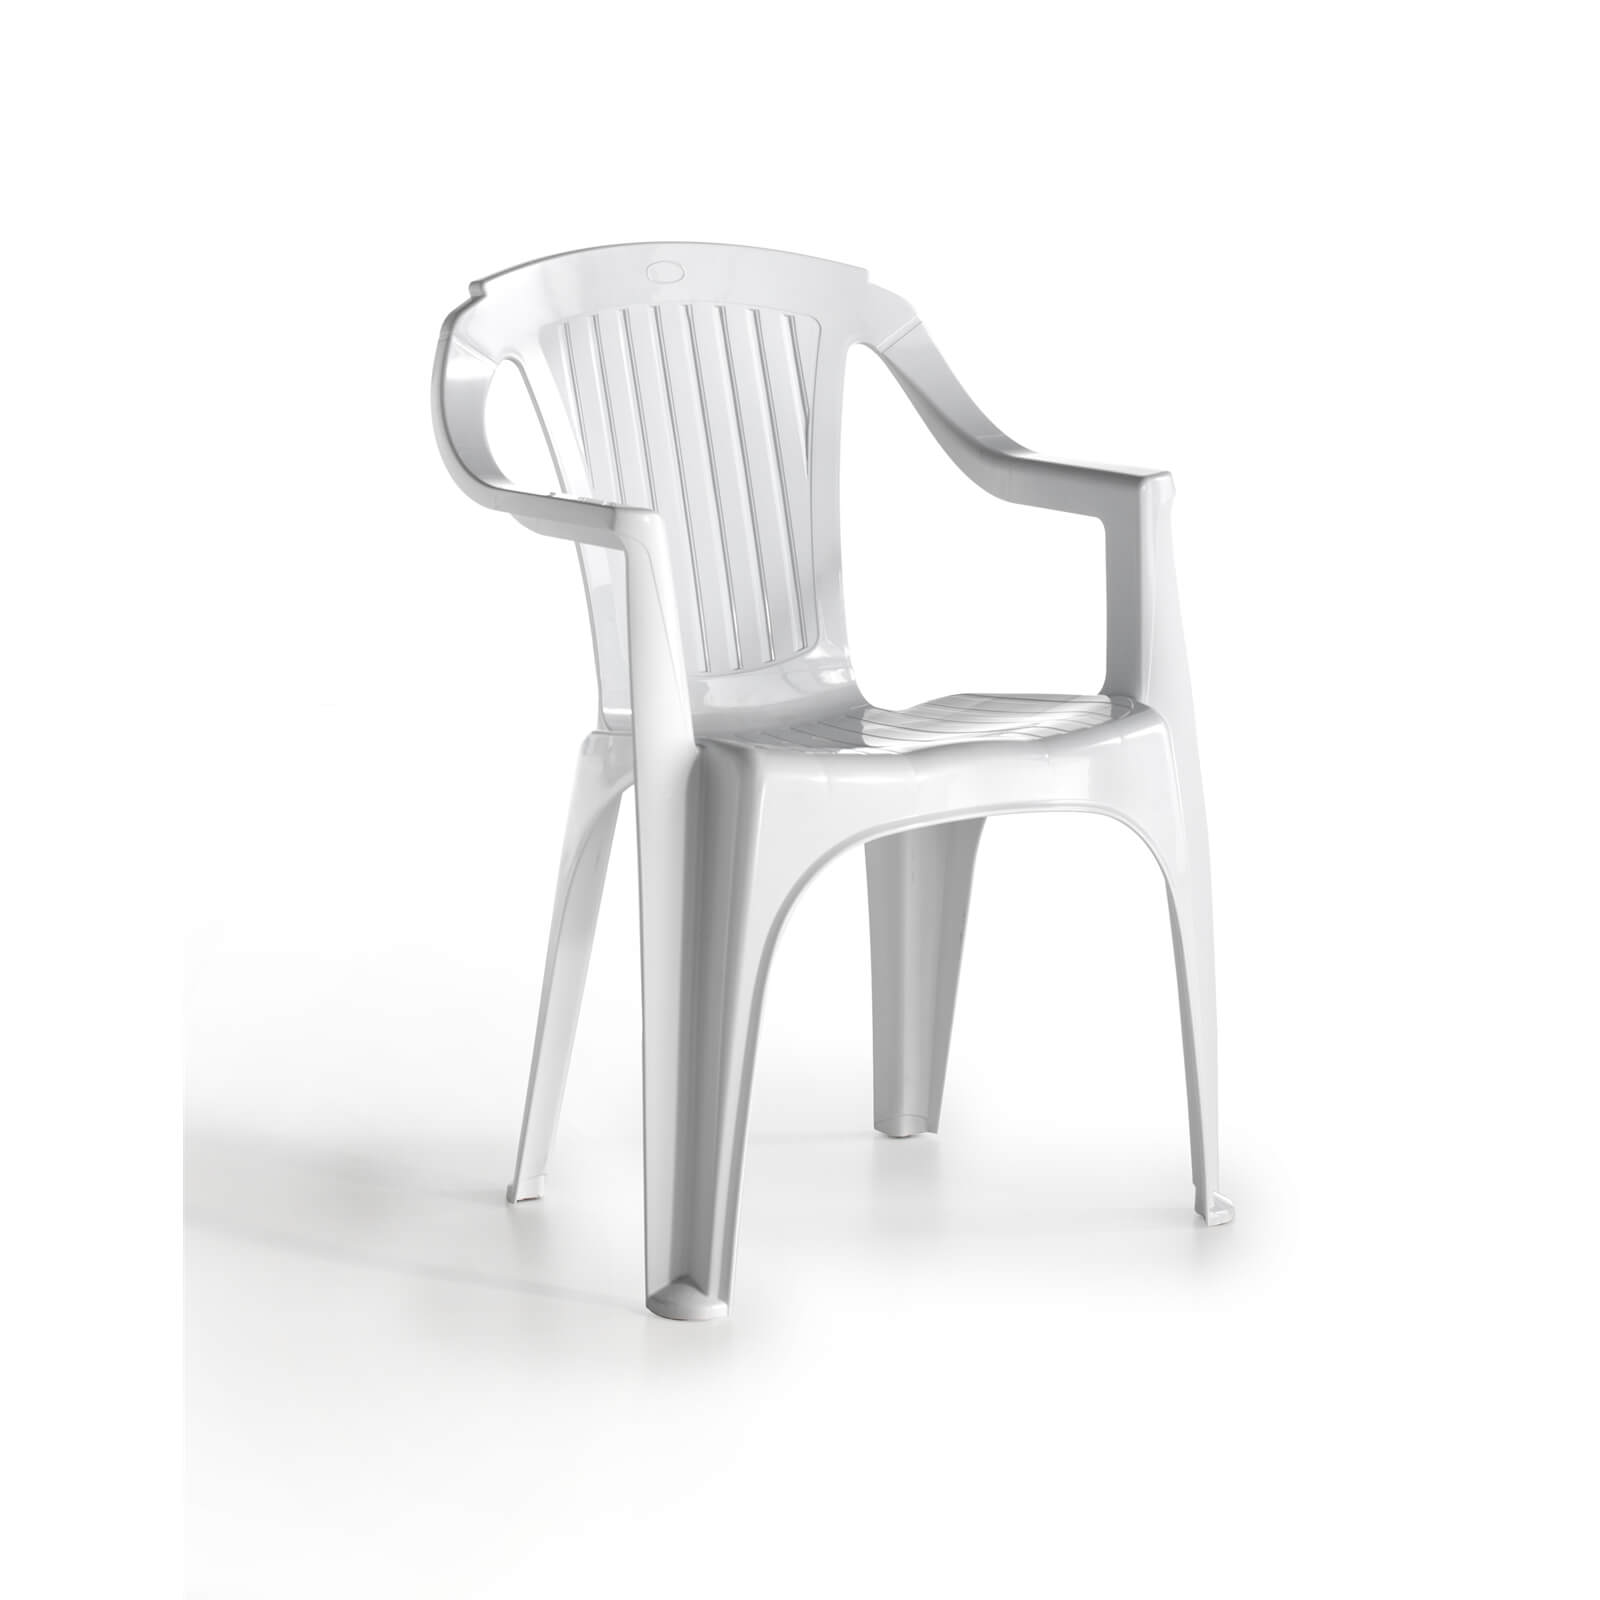 plastic chairs